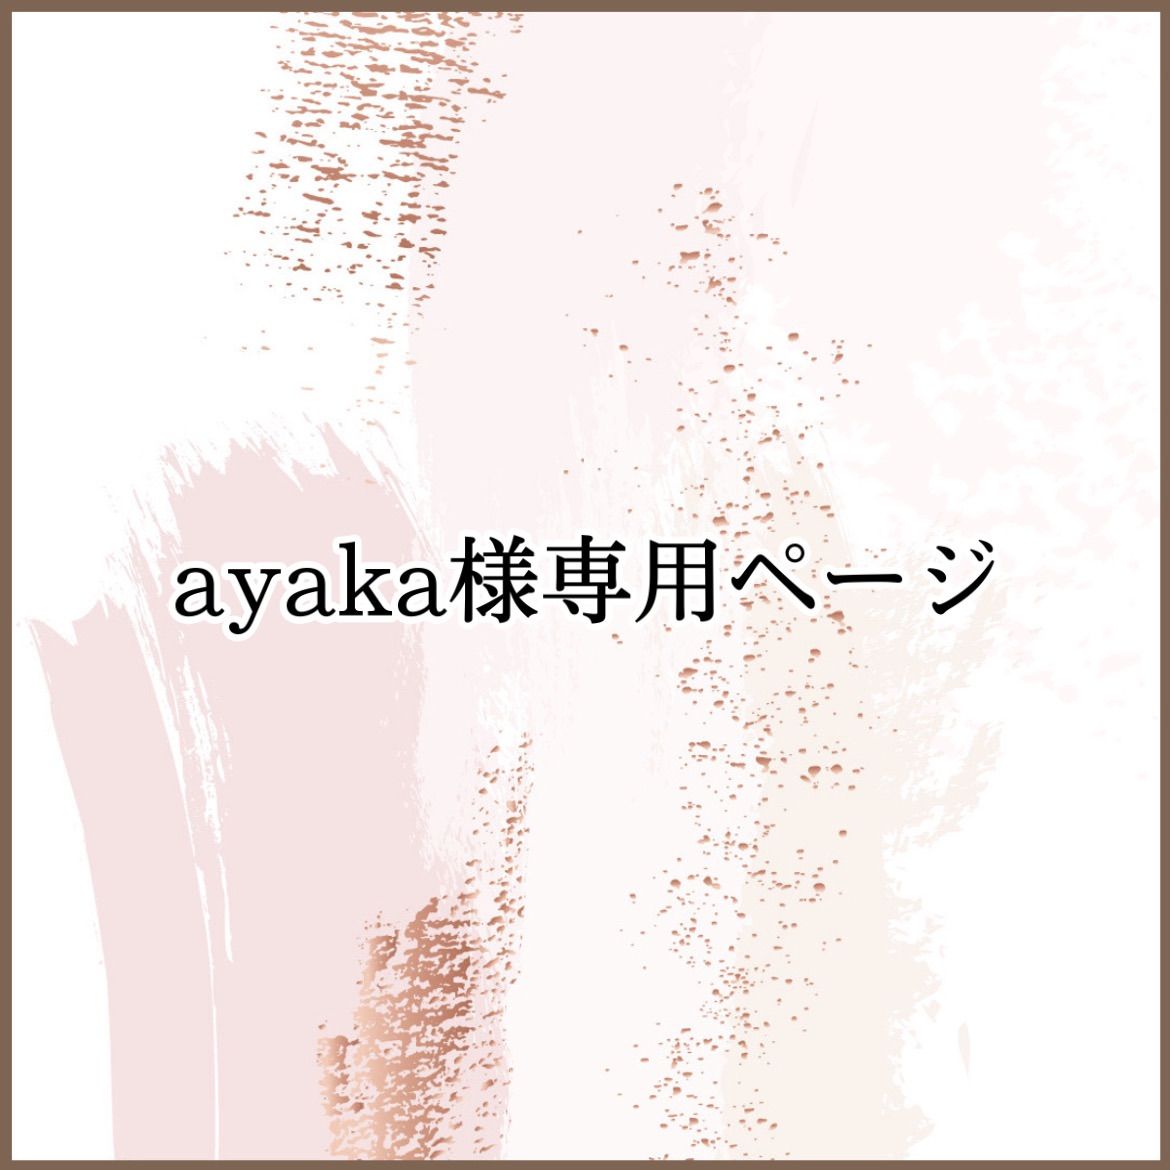 Ayaka 様 専用 その他 | discovermediaworks.com